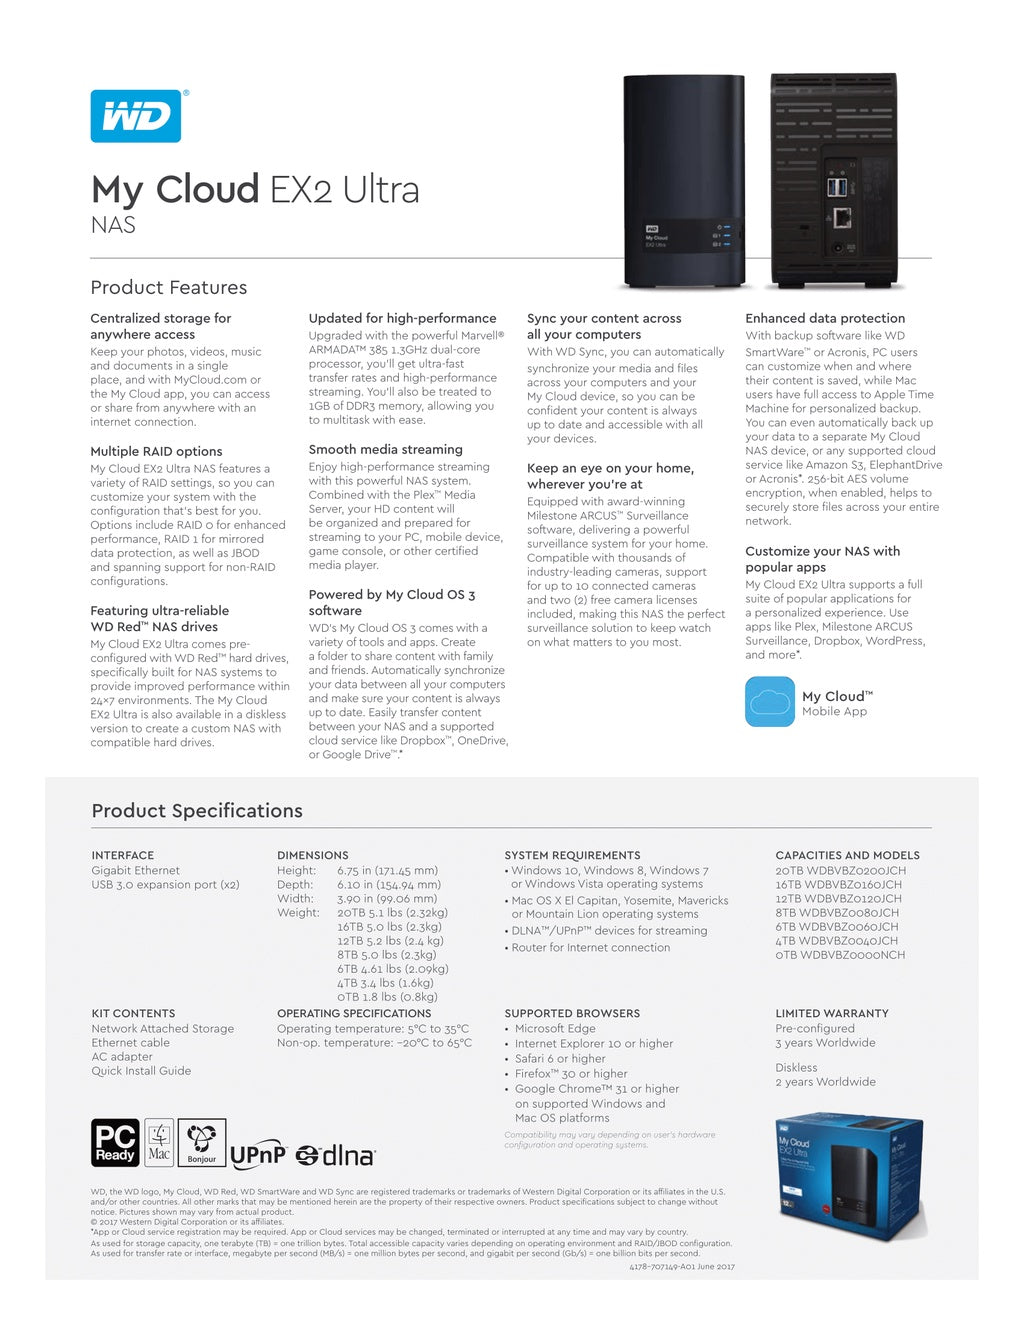 Western Digital WD My Cloud EX2 Ultra NAS Enclosures